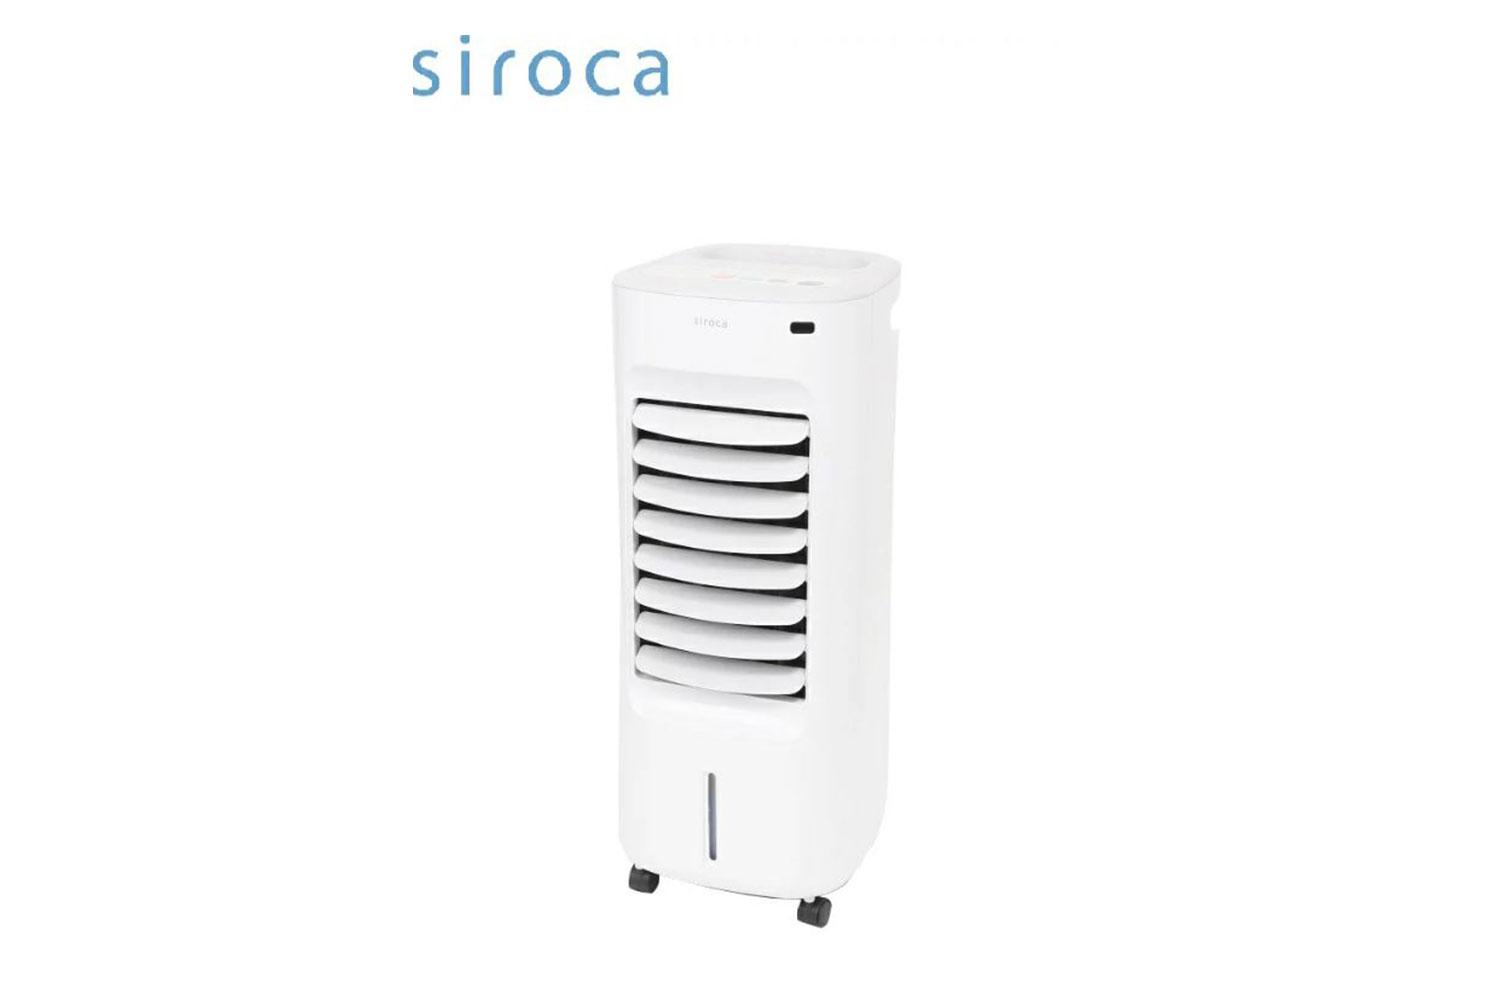 新品同様 siroca SH-C251 WHITE i9tmg.com.br